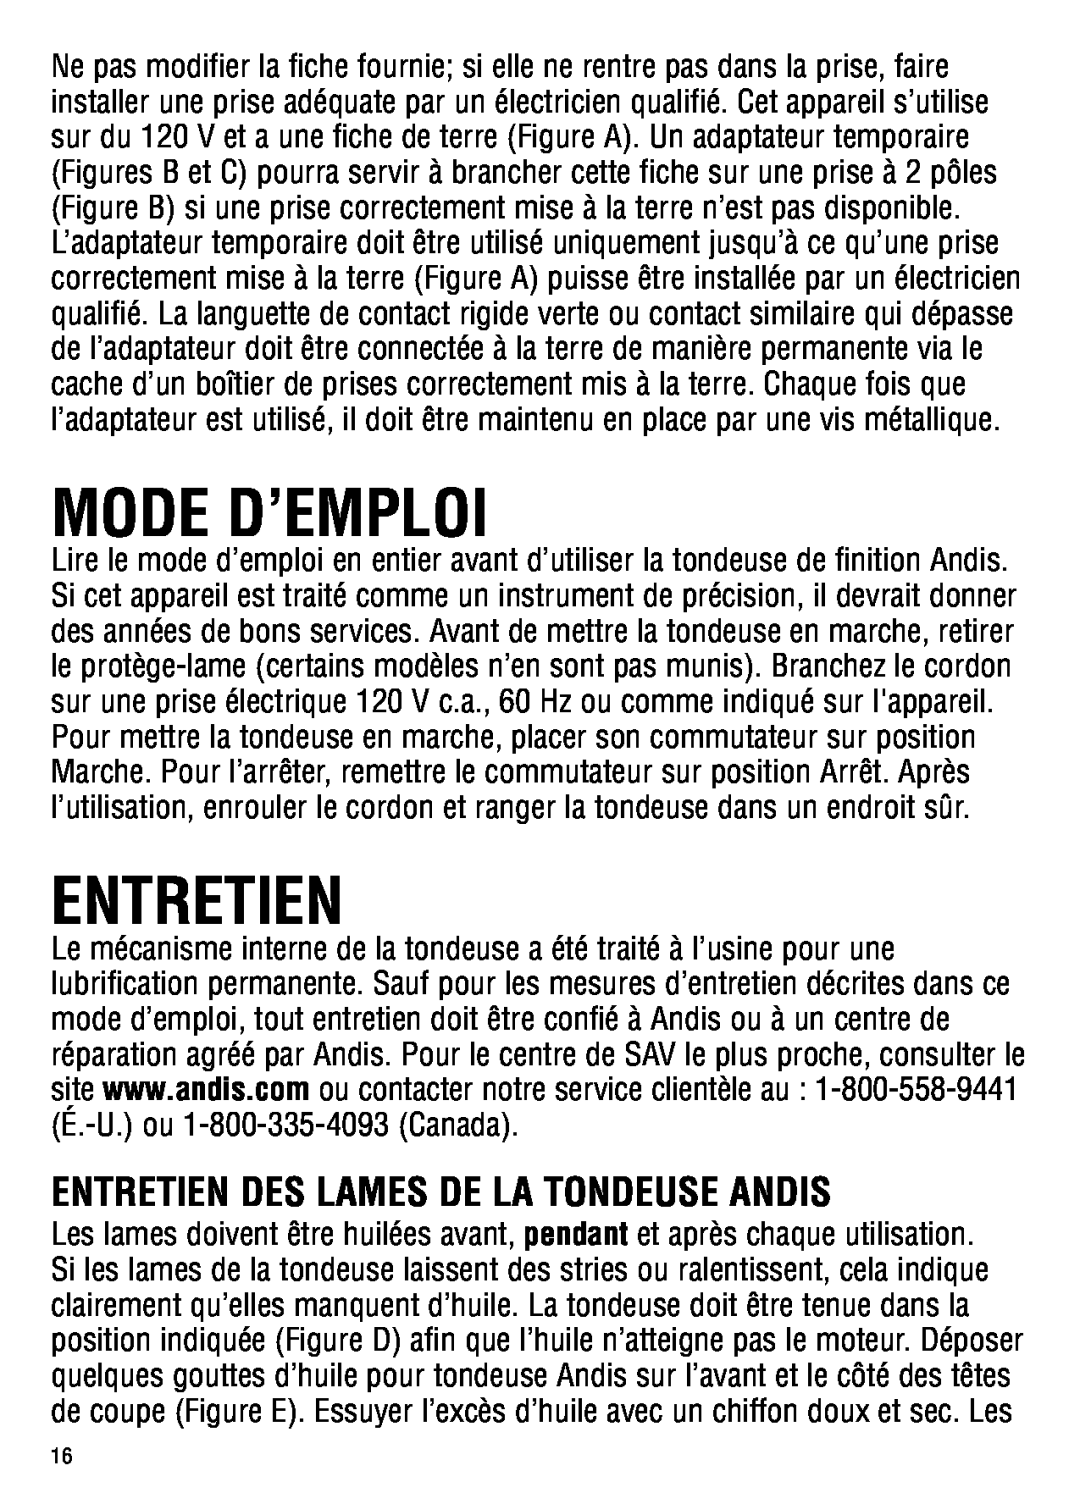 Andis Company go, gto manual Mode D’Emploi, Entretien Des Lames De La Tondeuse Andis 